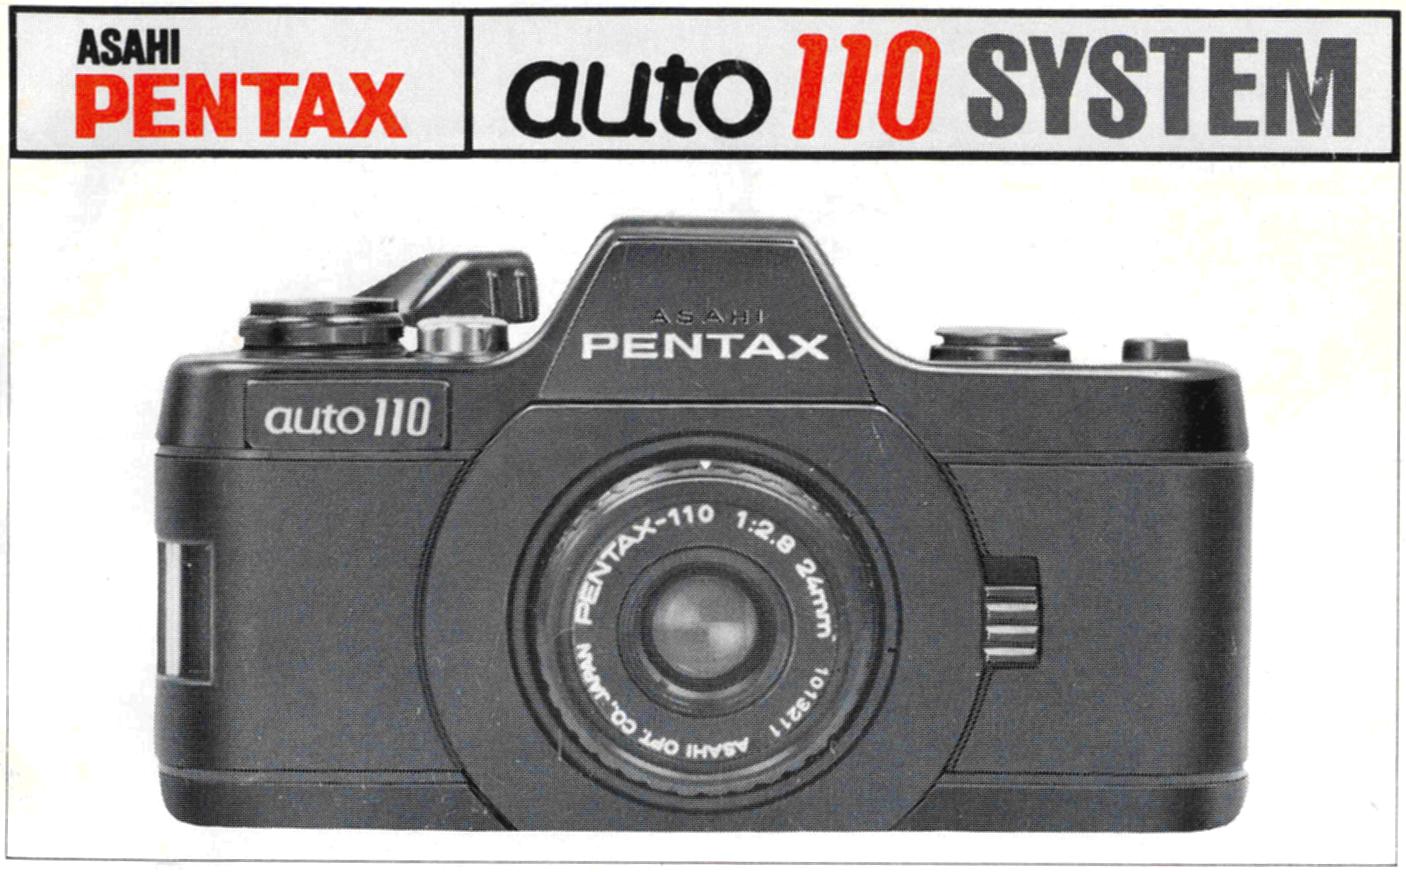 Asahi Pentax auto 110 System Manual Cover